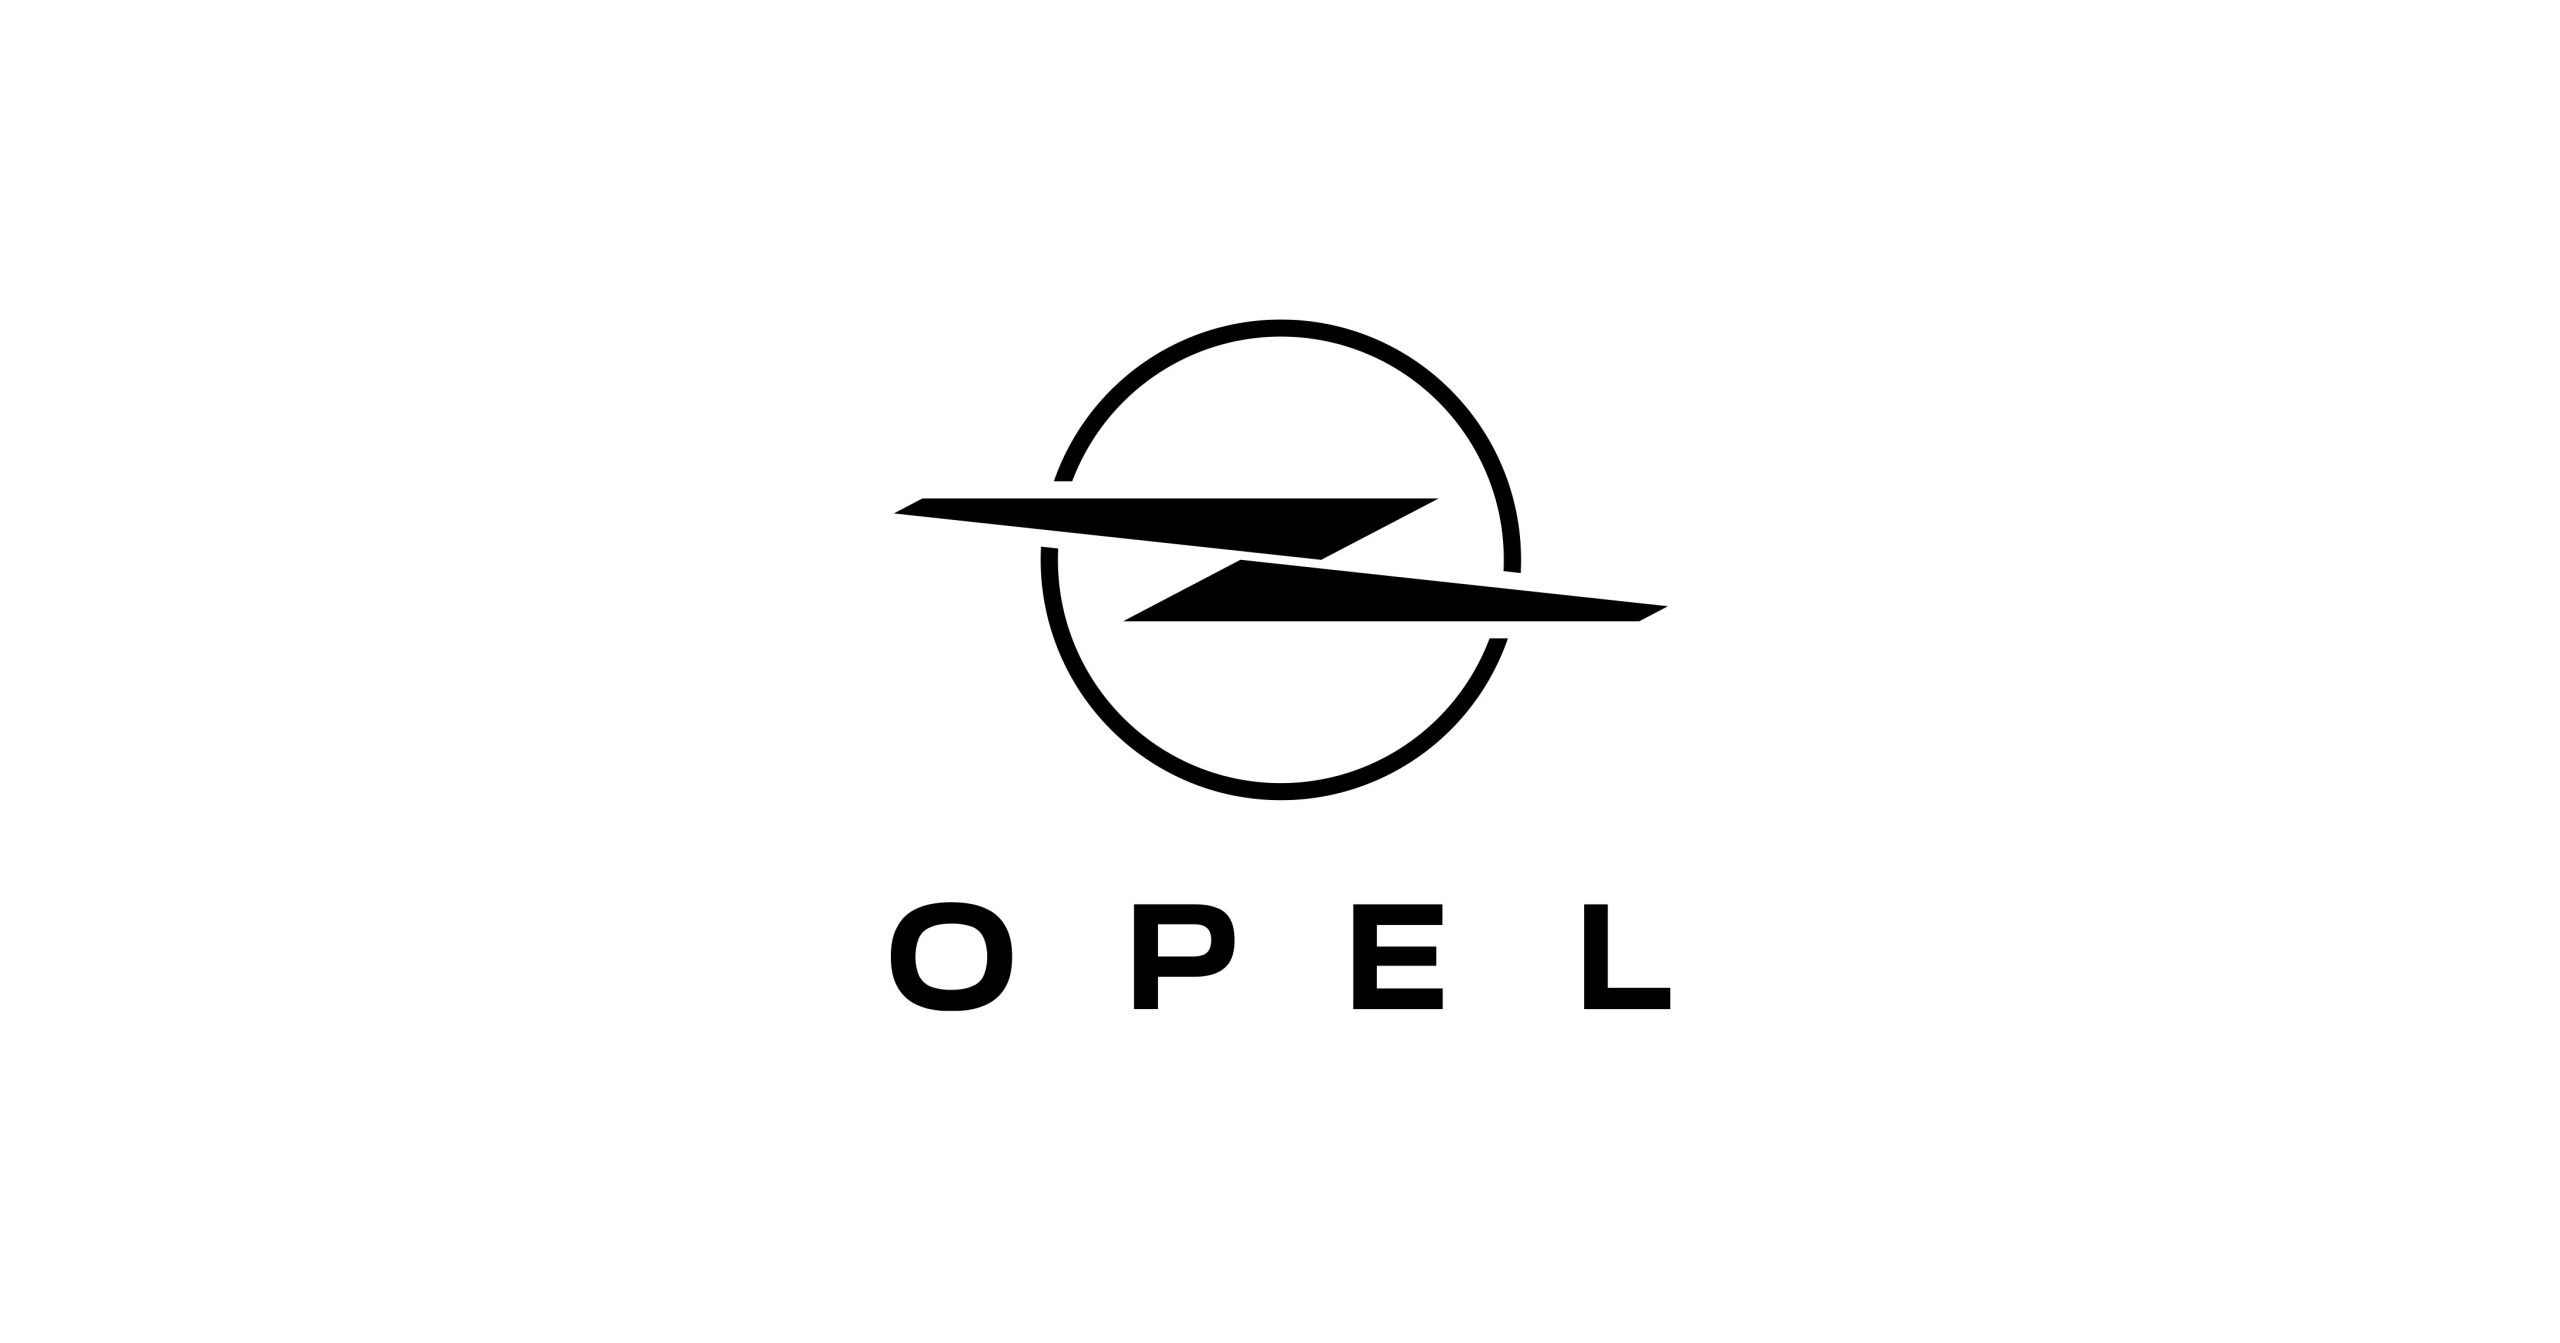 Opel svela il nuovo logo "Blitz"